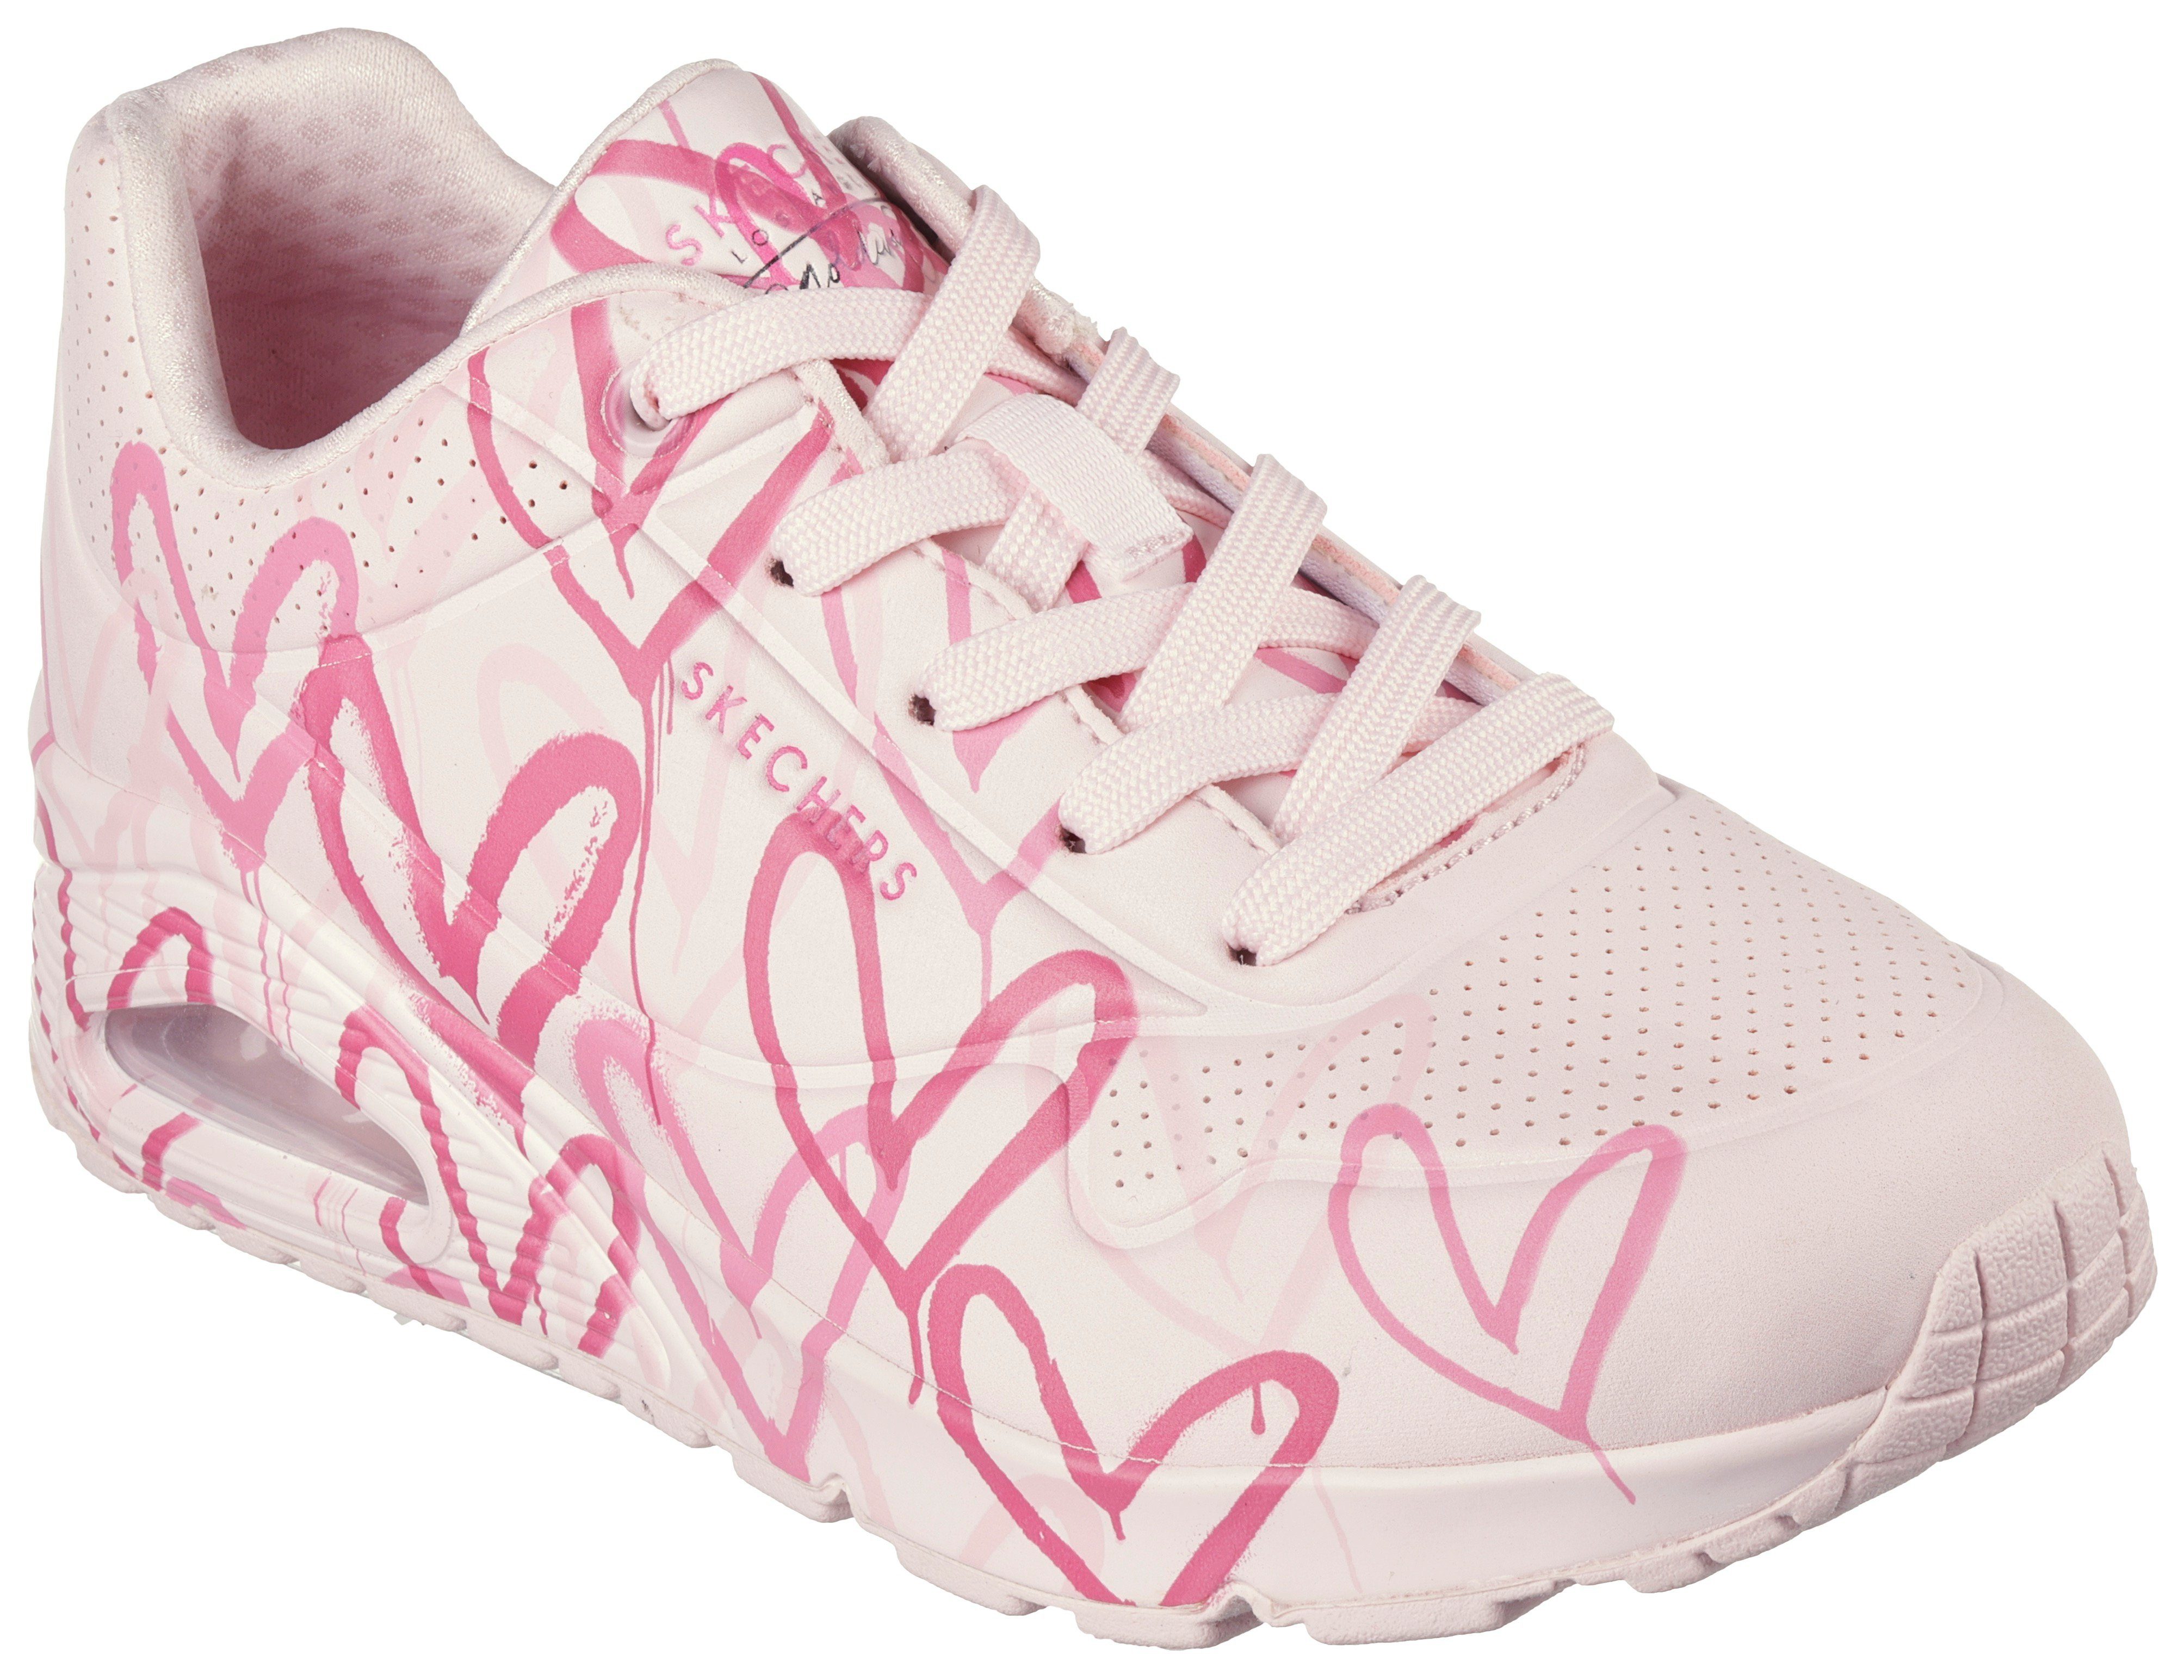 Skechers UNO-SPREAD THE LOVE Wedgesneaker mit auffälligem Graffiti-Print rosa-weiß-multi